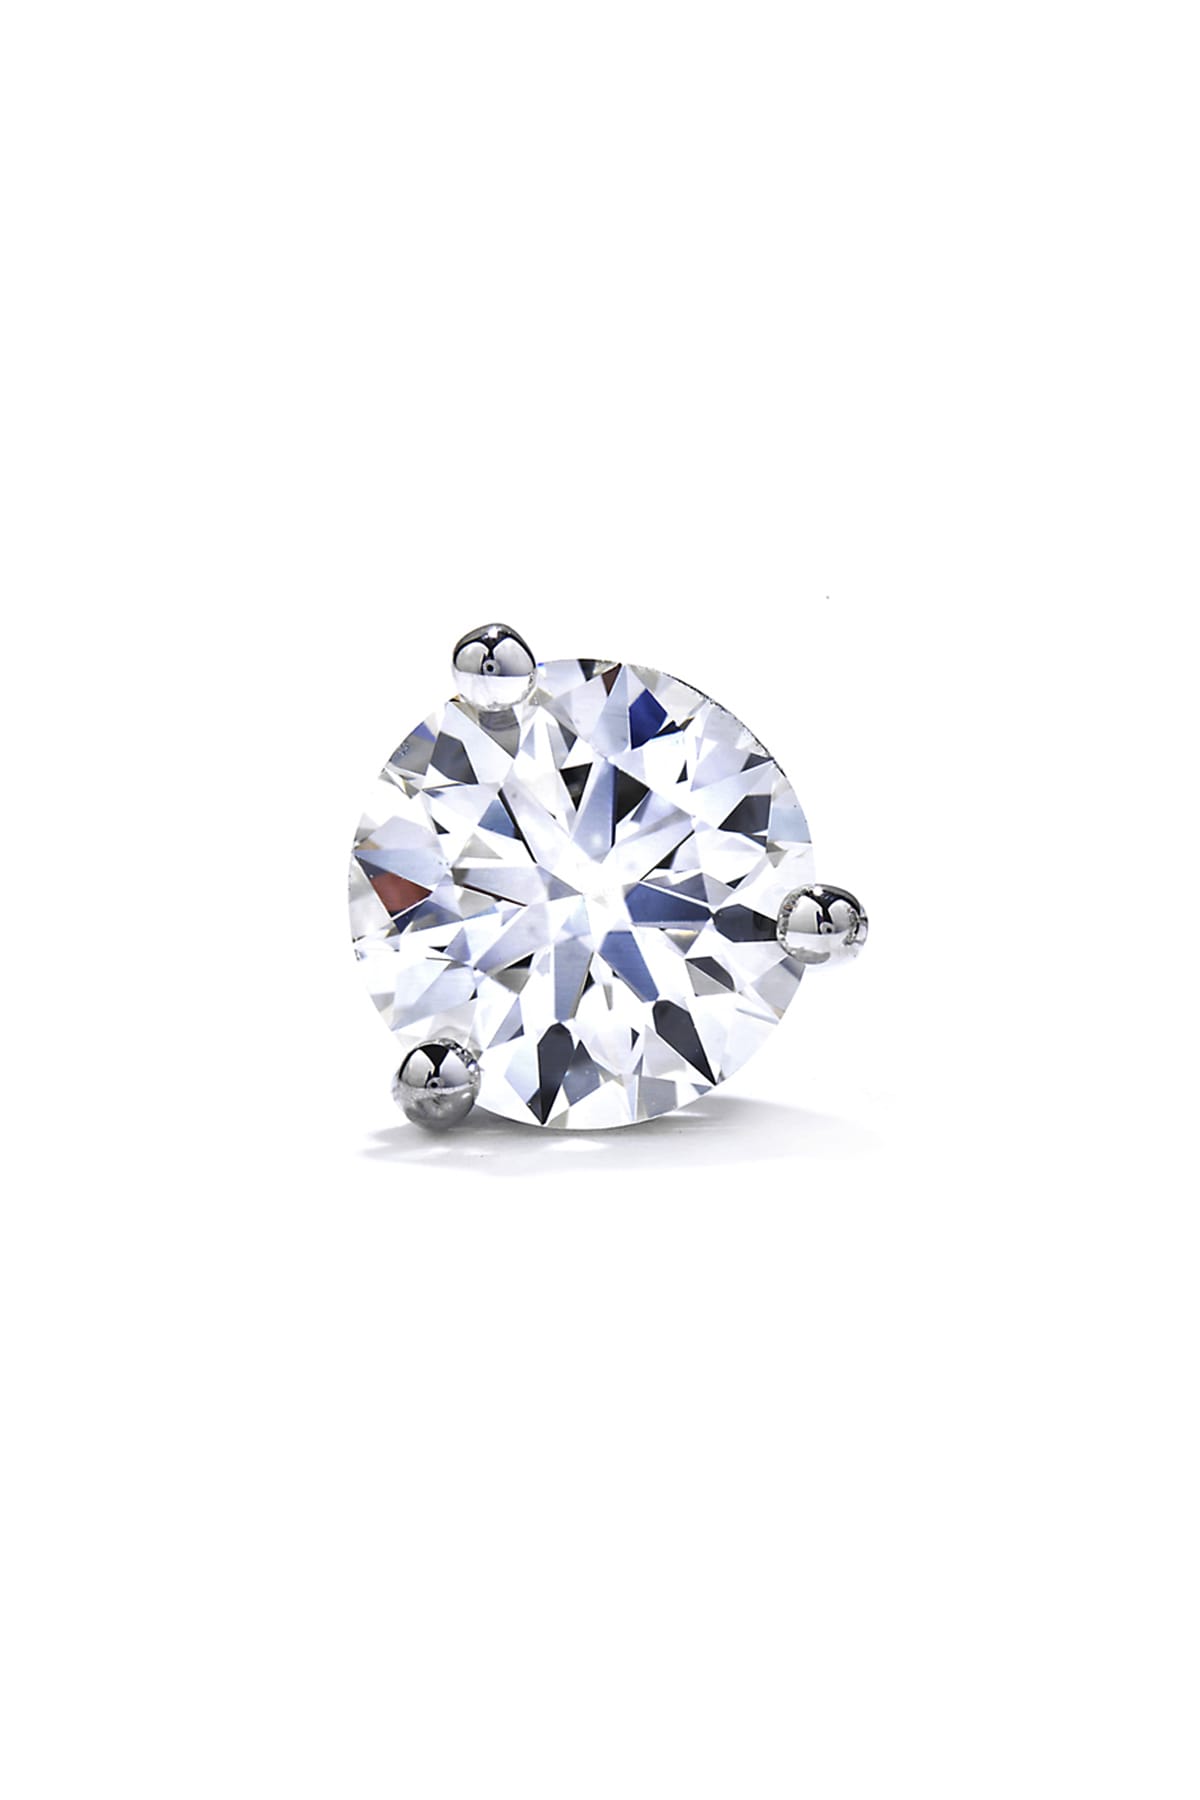 Single 0.15 Carat Diamond Stud Earring available at LeGassick Diamonds and Jewellery Gold Coast, Australia.